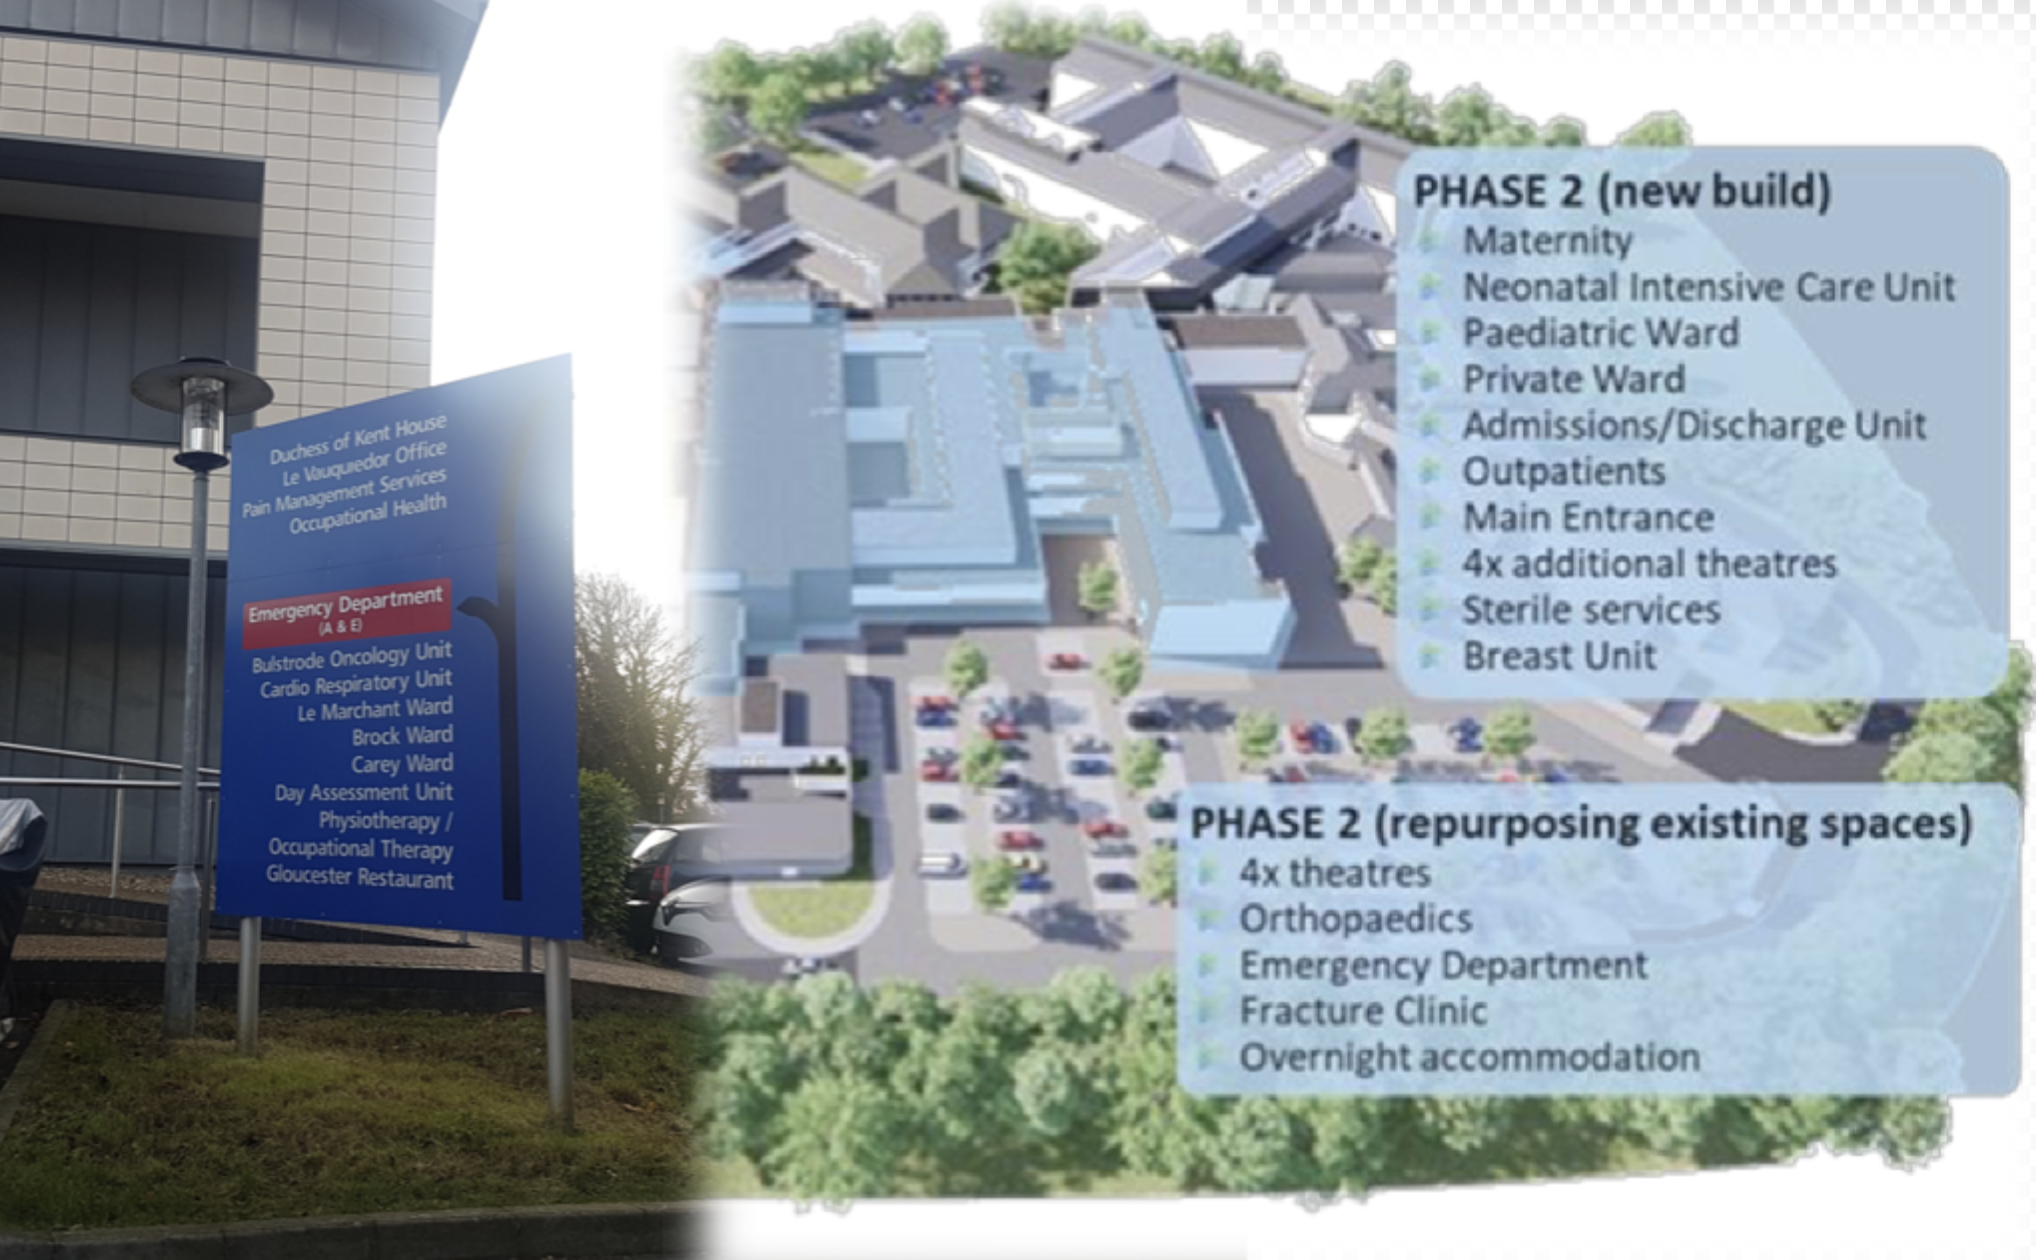 PEH hospital plans 